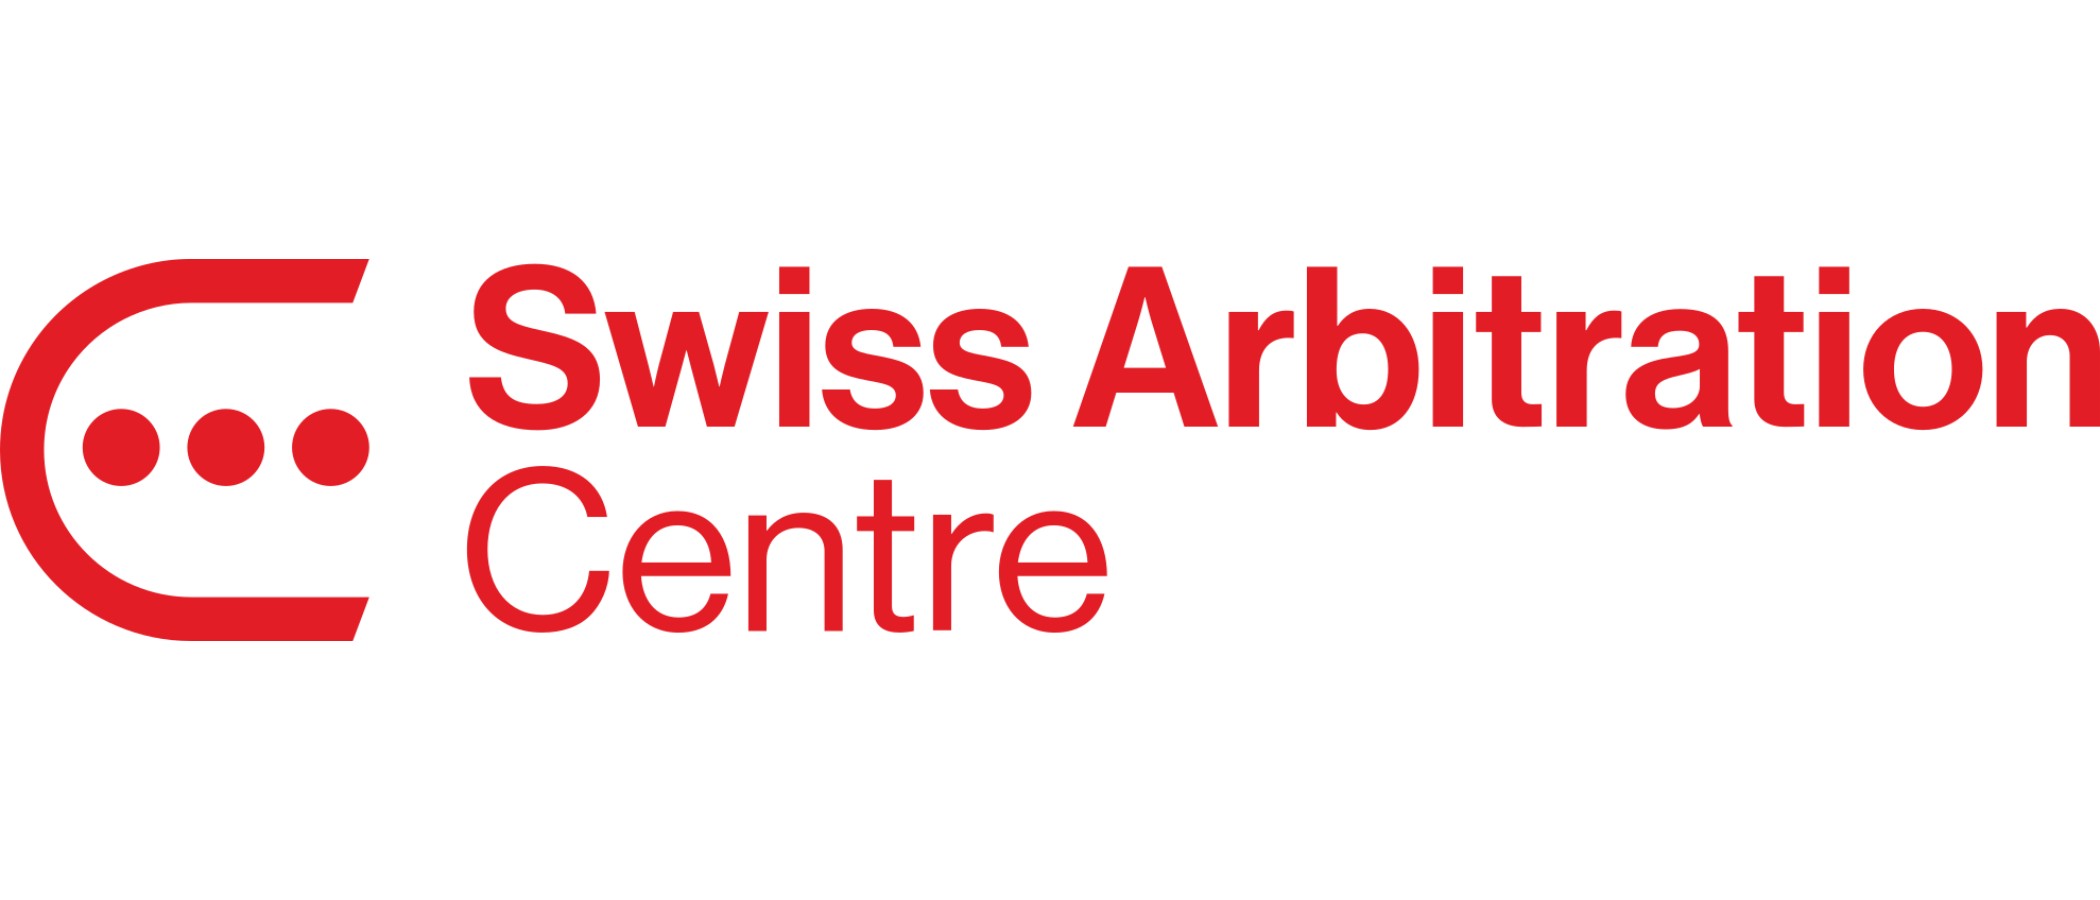 Swiss Arbitration Centre